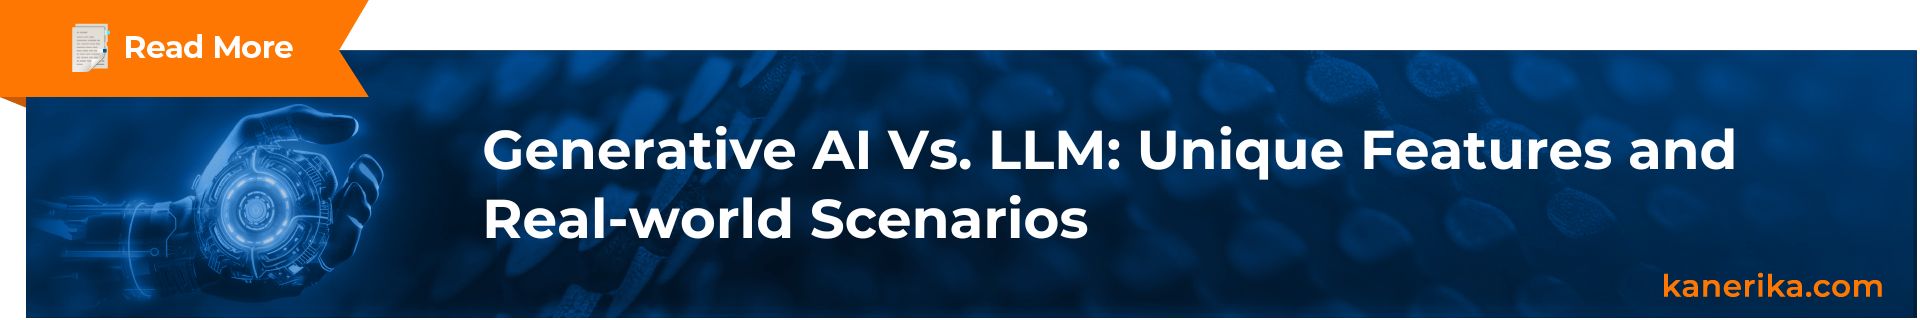 Generative AI vs LLM